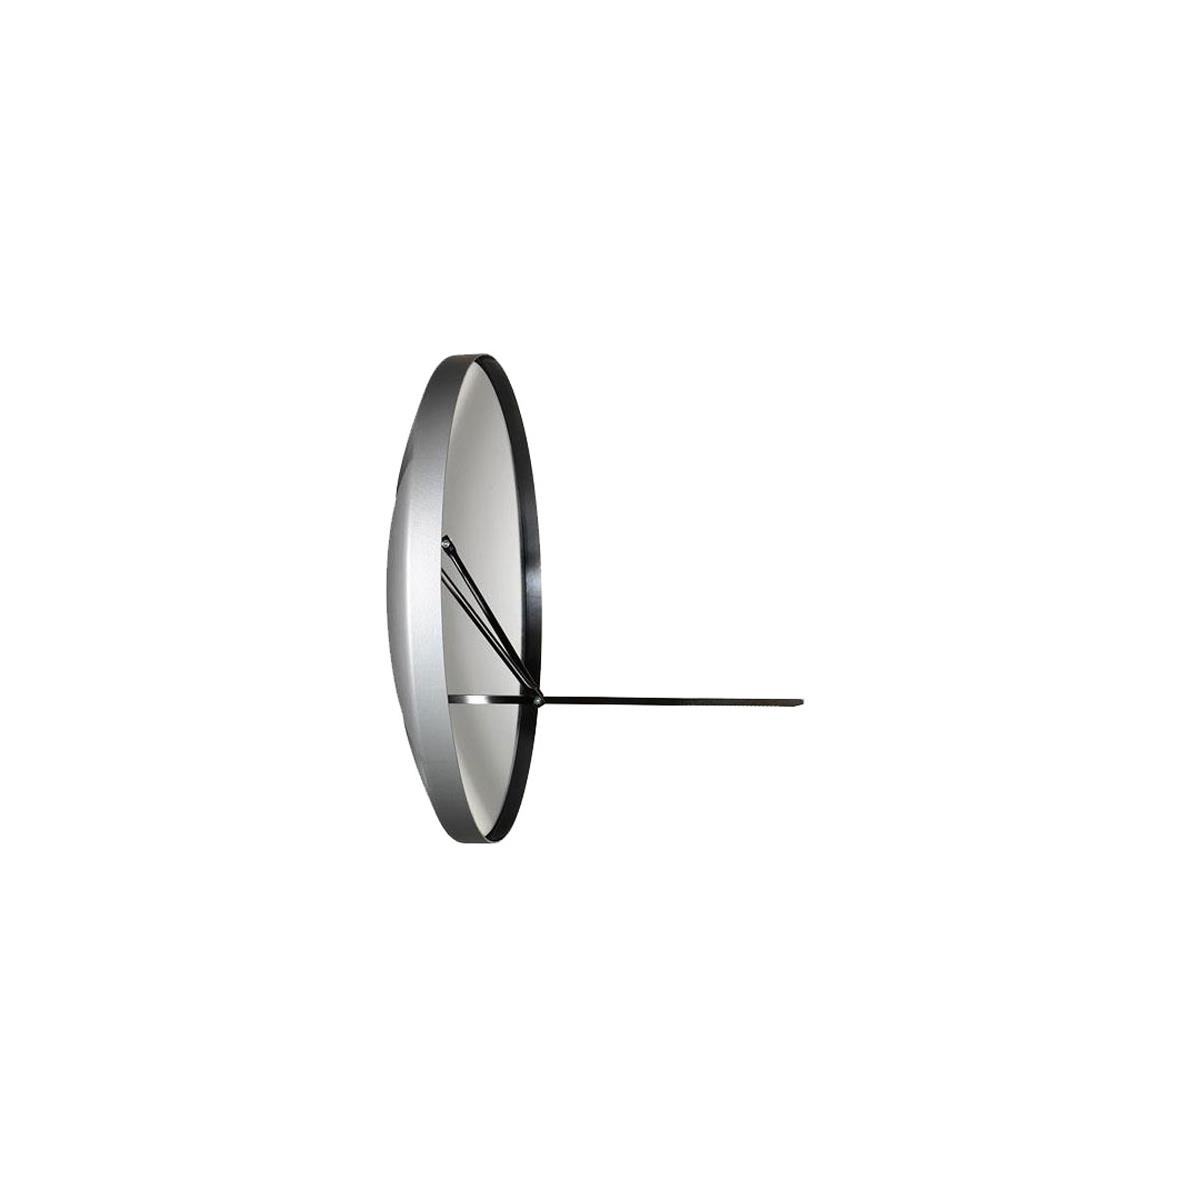 Image of Broncolor Mini-Satellite Reflector